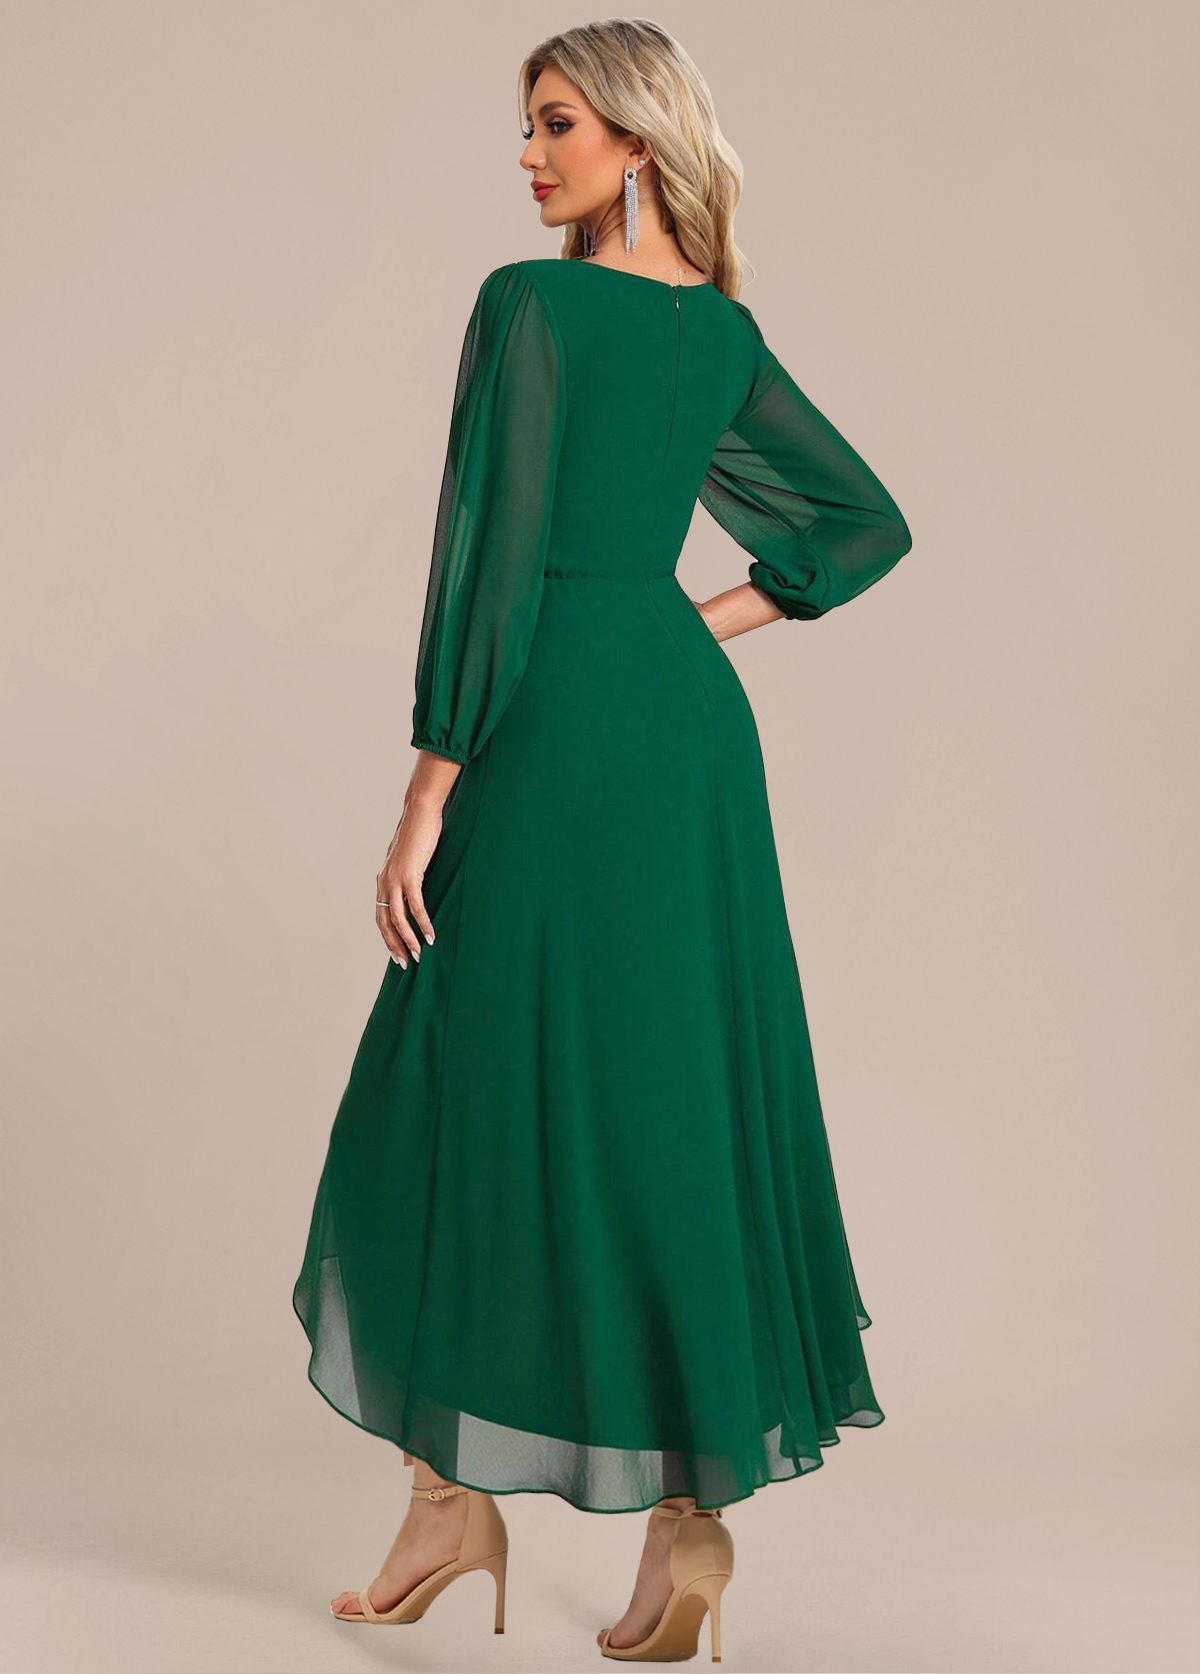 Green Surplice High Low Three Quarter Length Sleeve Dress